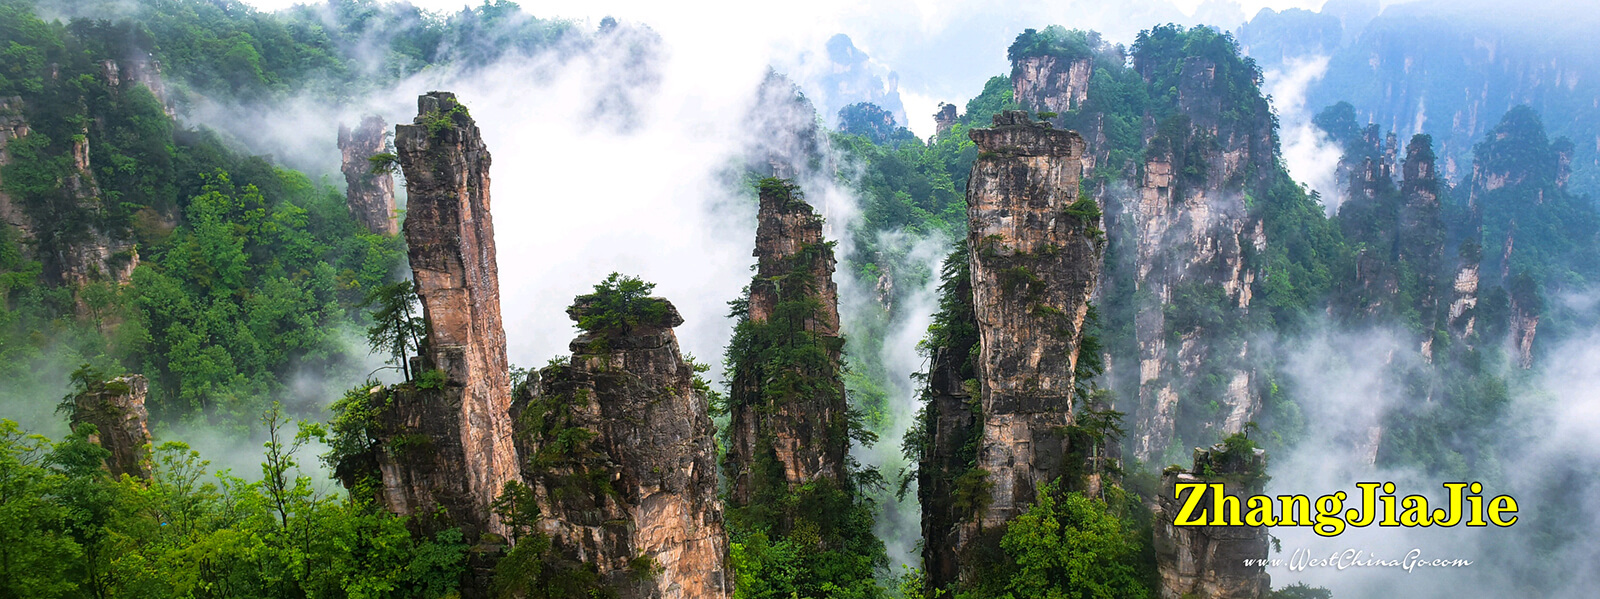 Zhangjiajie National Forest Park - China ChengDu Tours, Chengdu